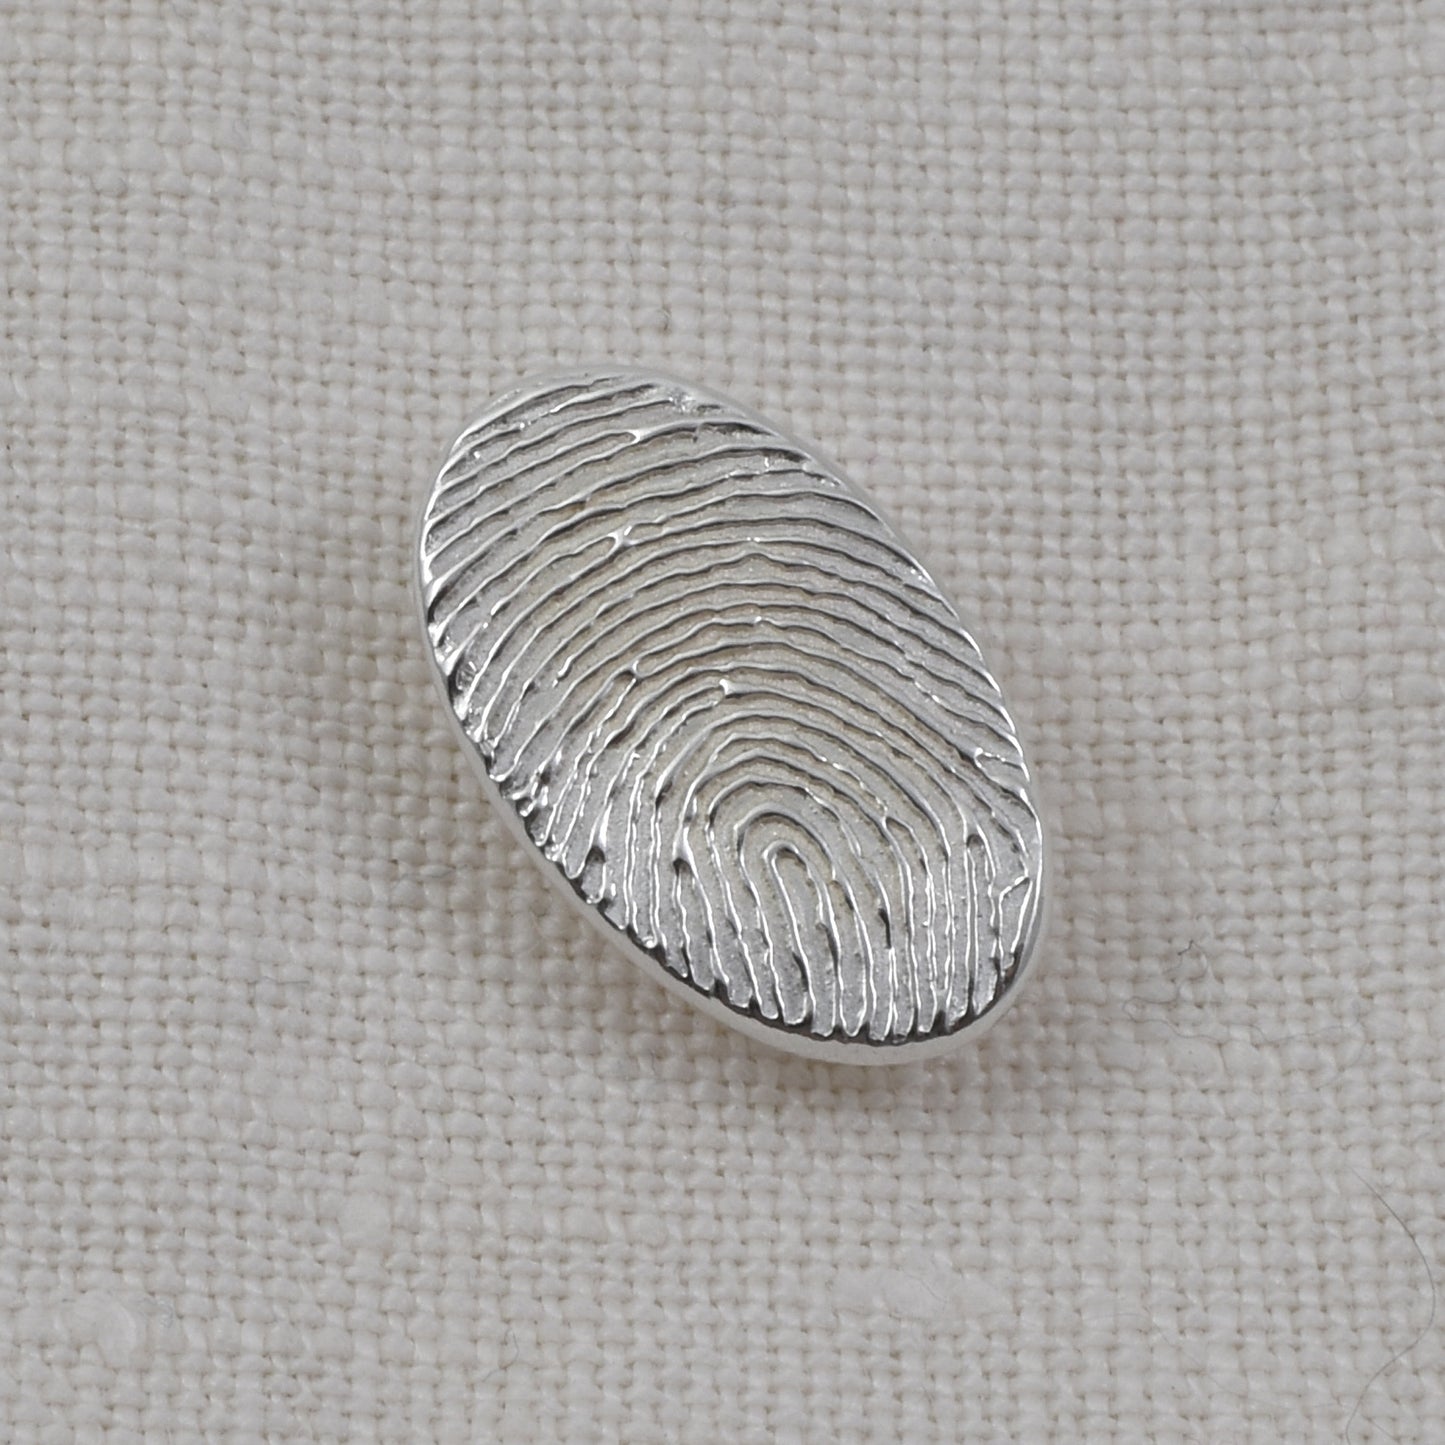 Fingerprint Tie Tack / Lapel Pin